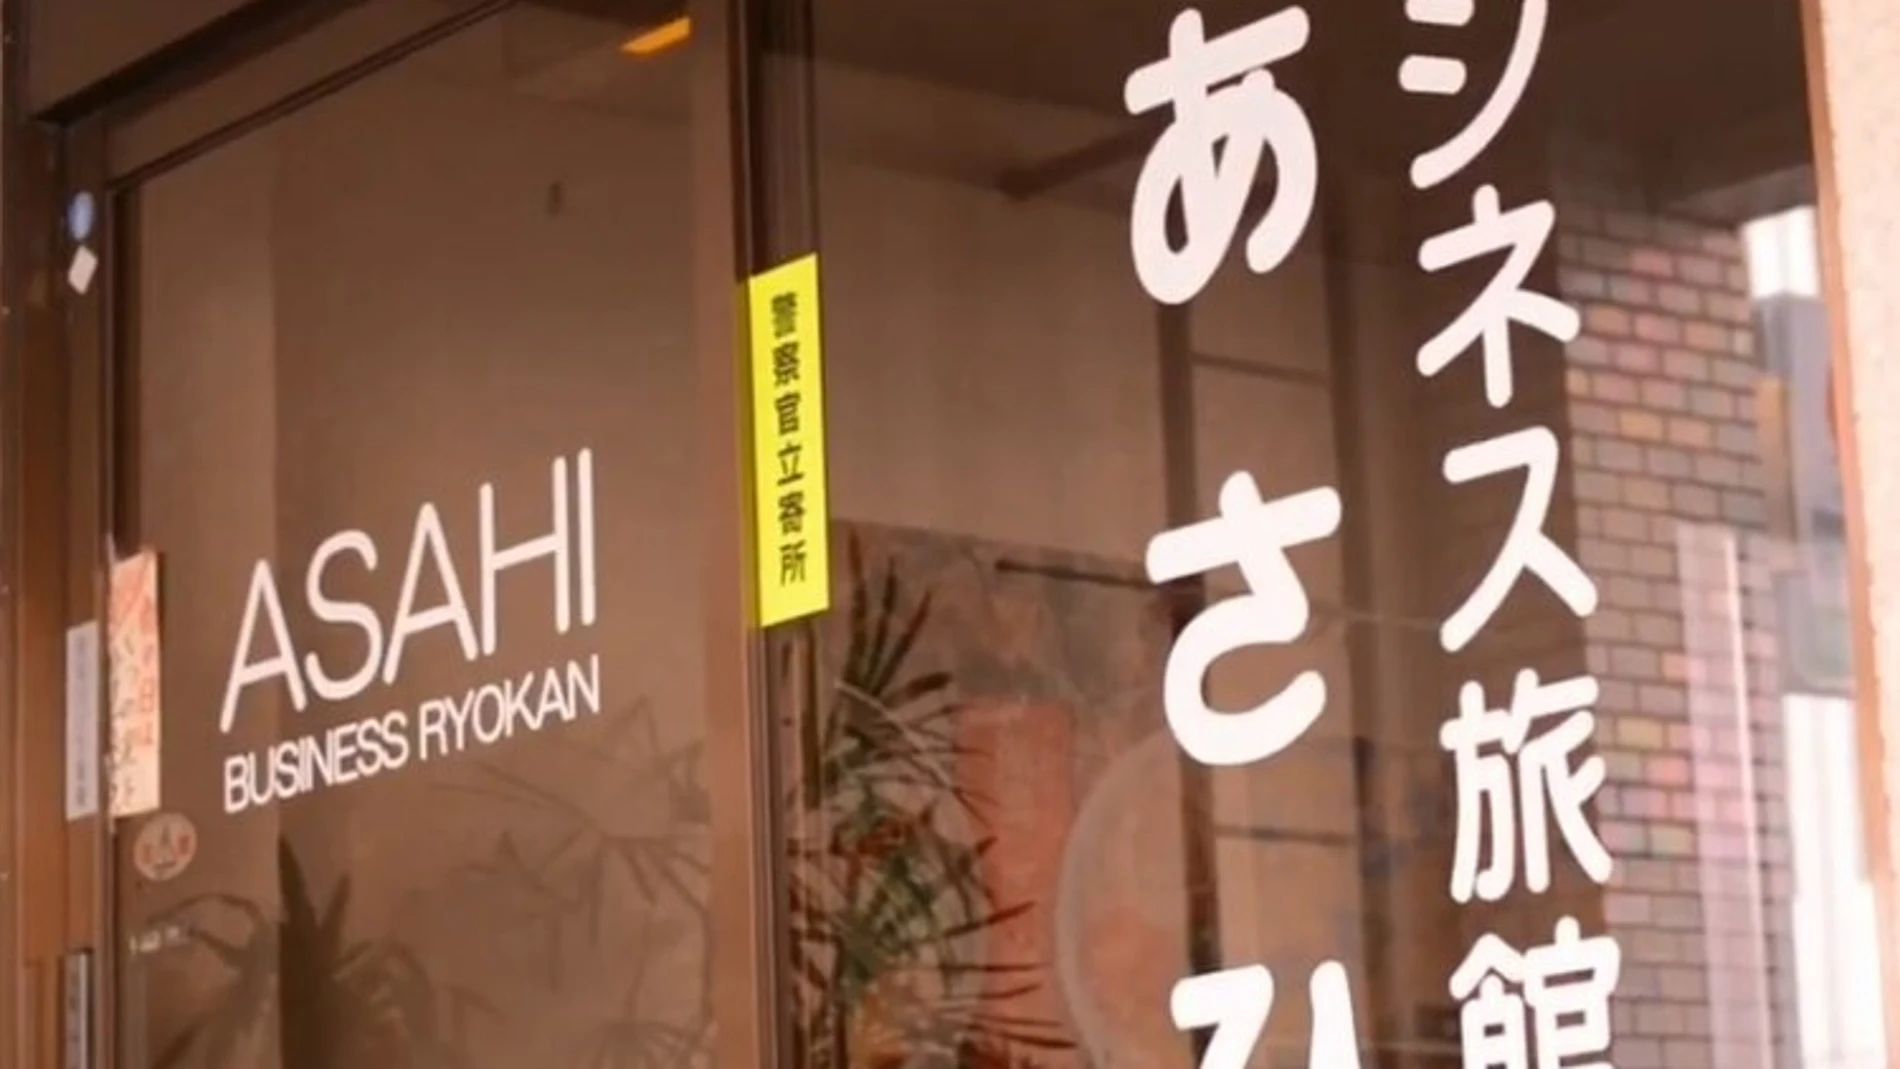 Hotel Business Ryokan Asahun